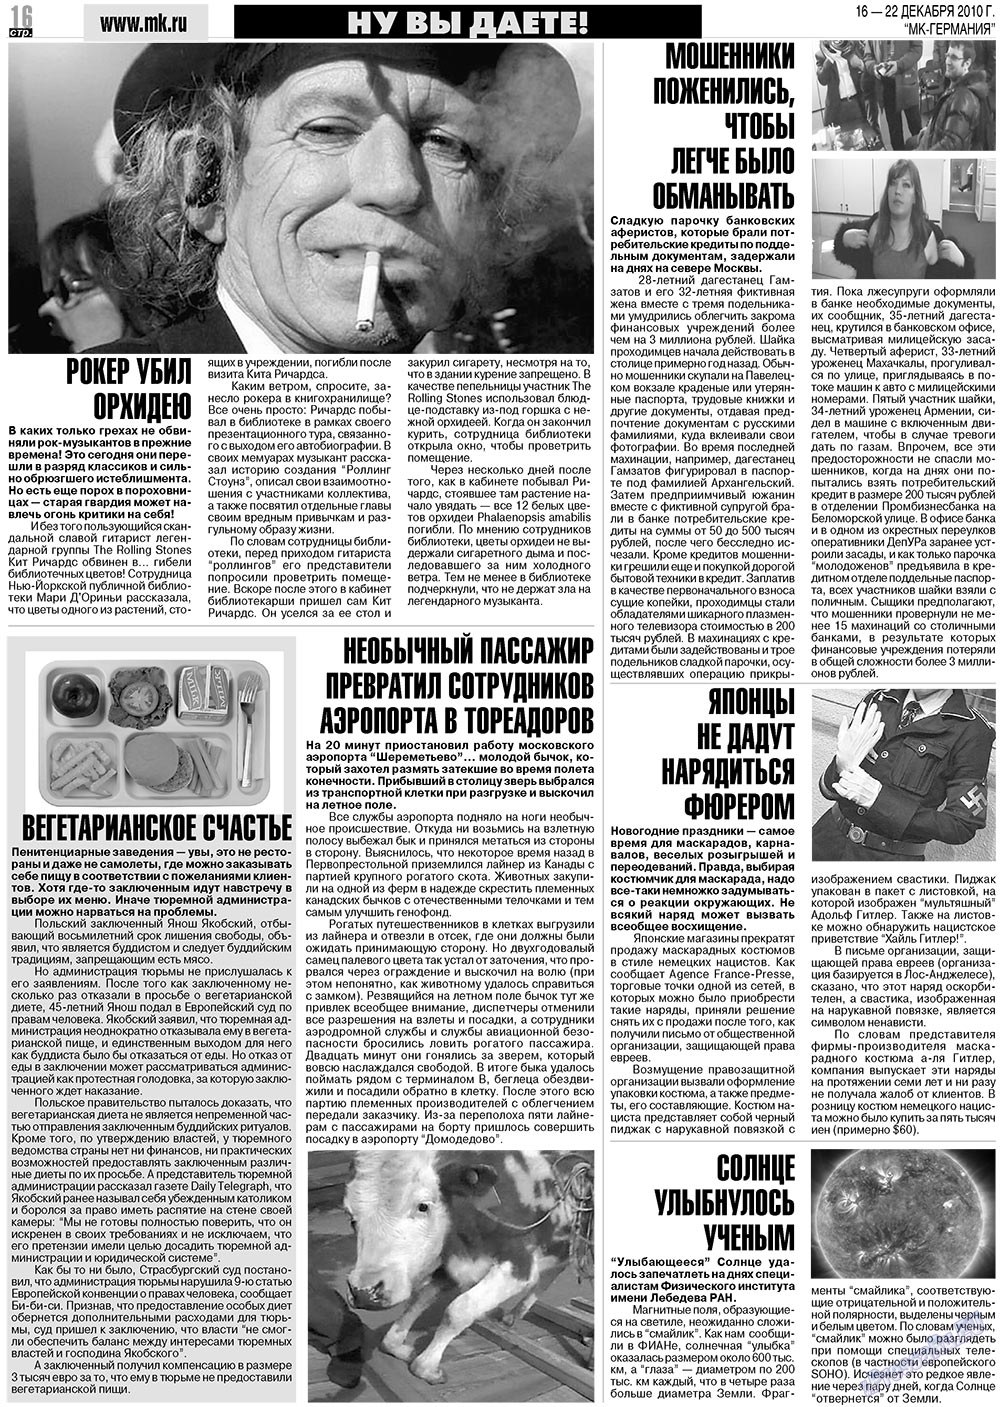 МК-Германия, газета. 2010 №51 стр.16